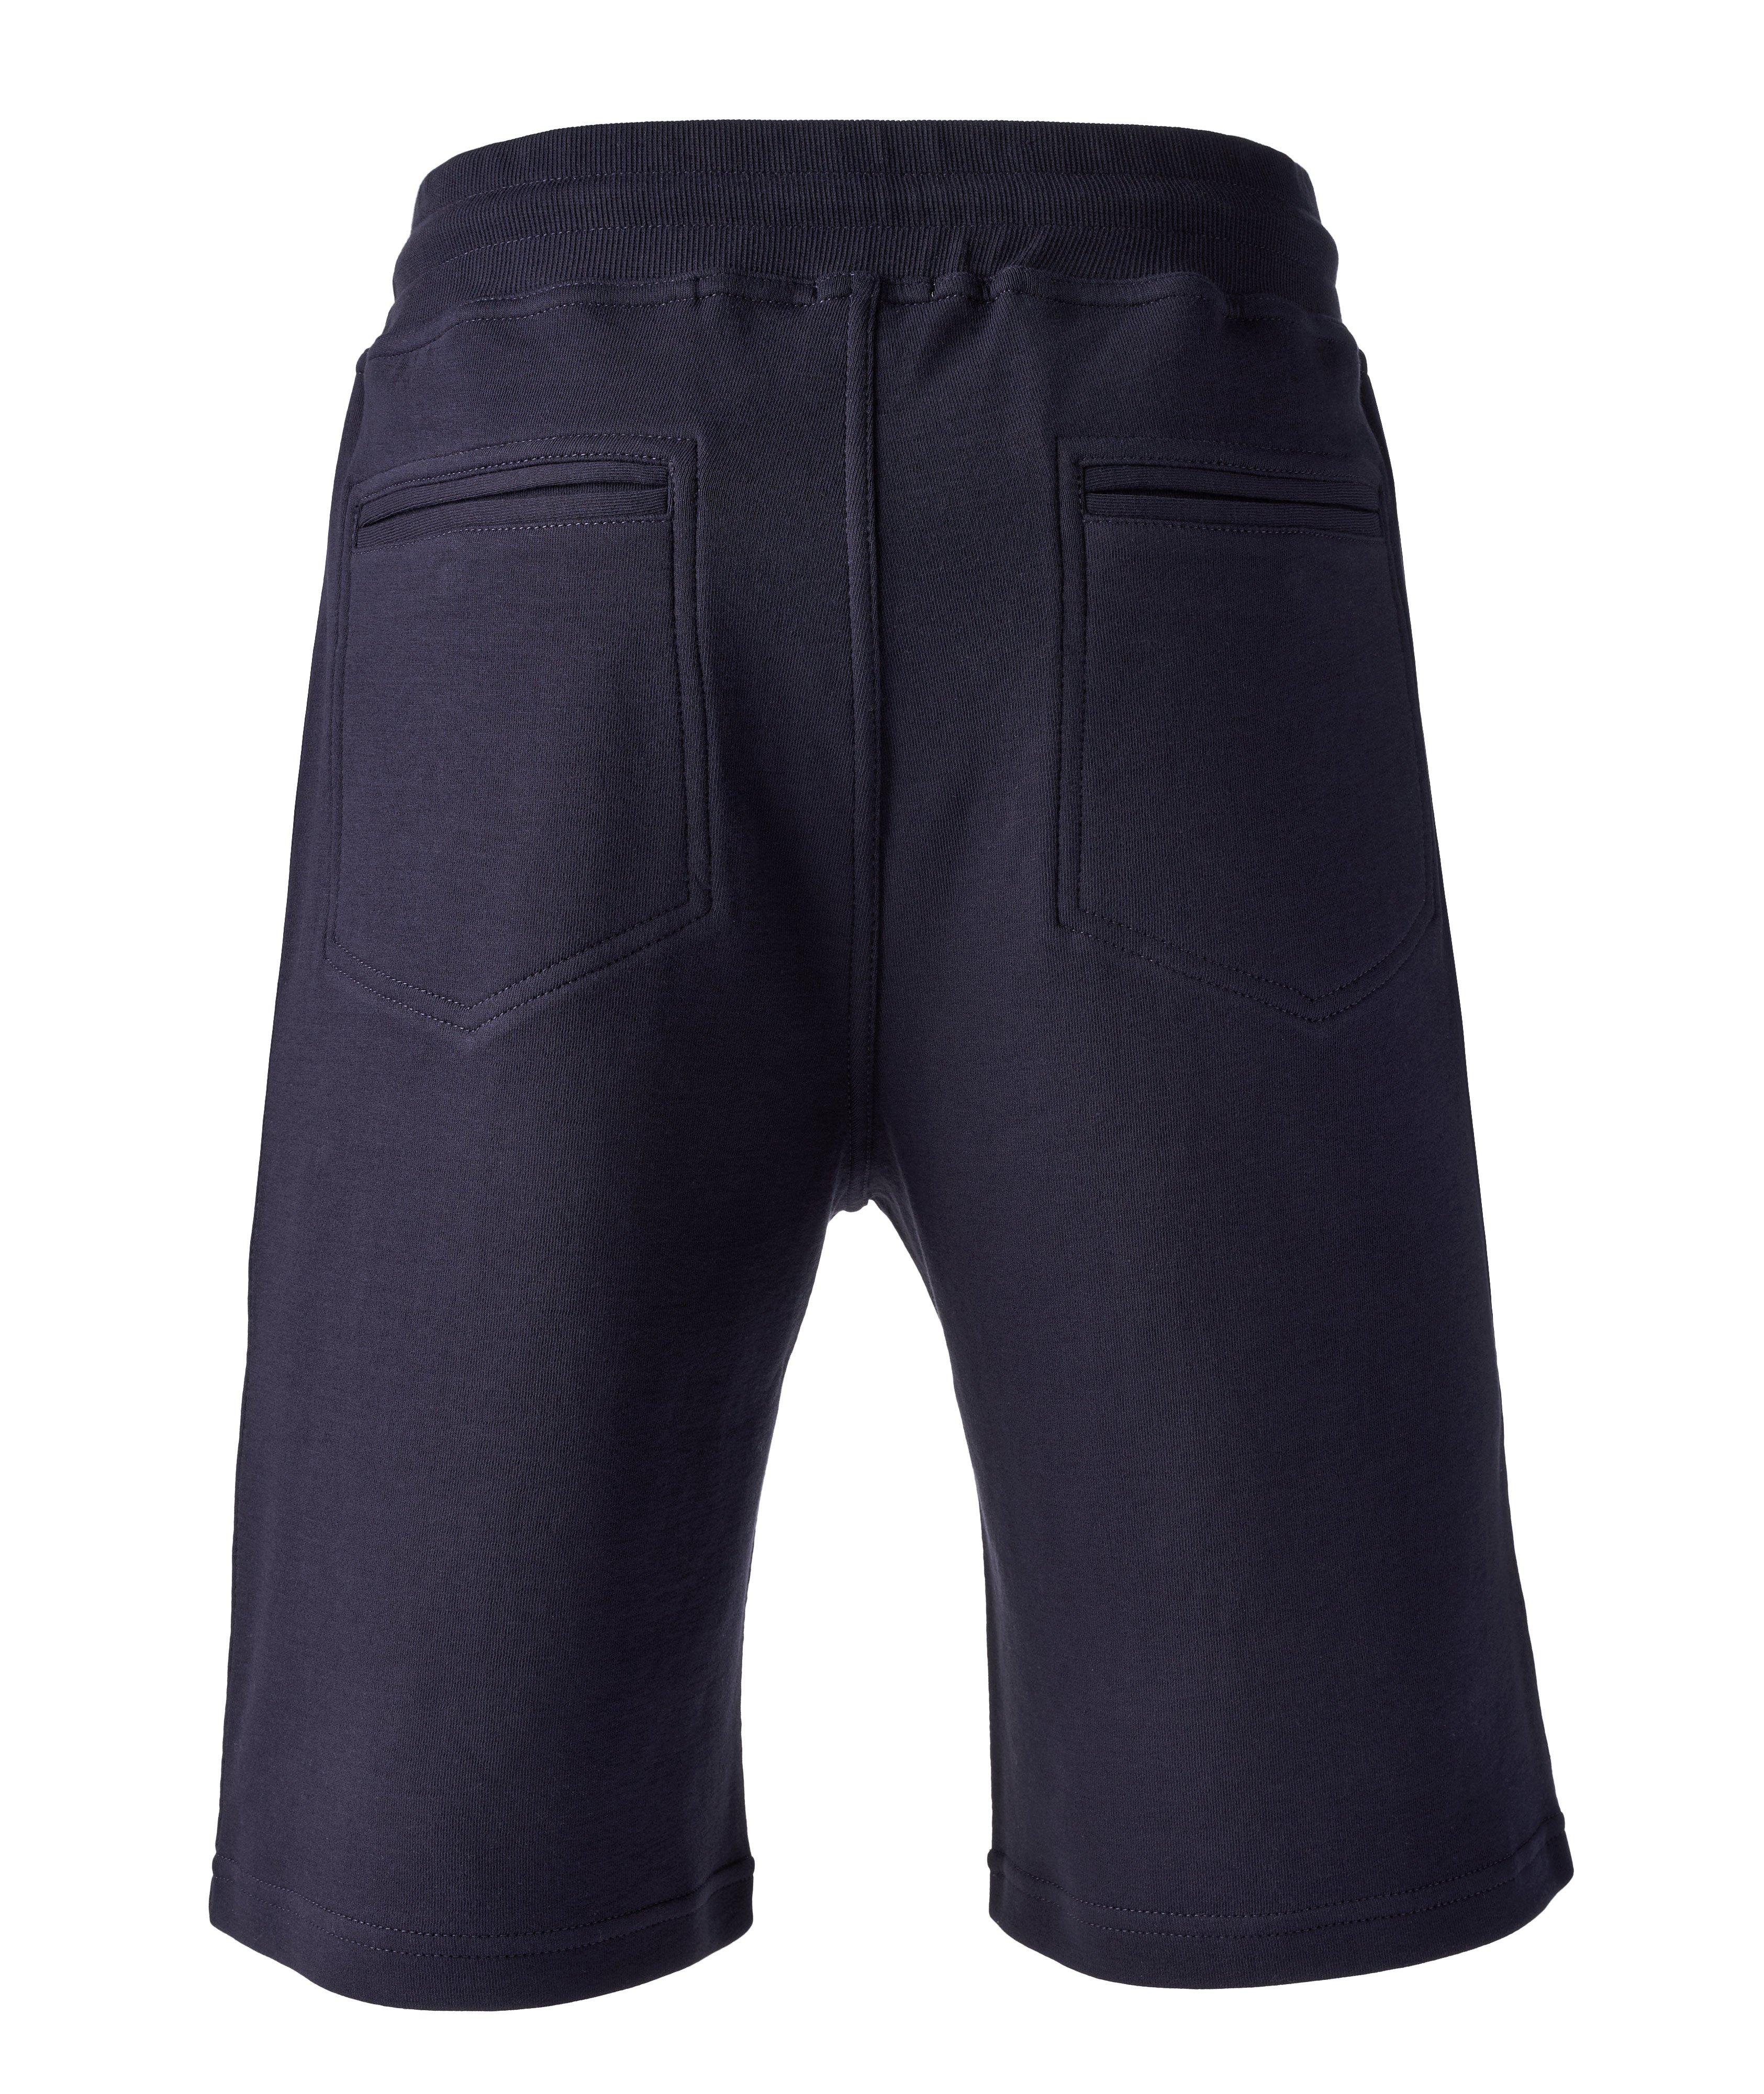 Drawstring Cotton-Blend Shorts image 1